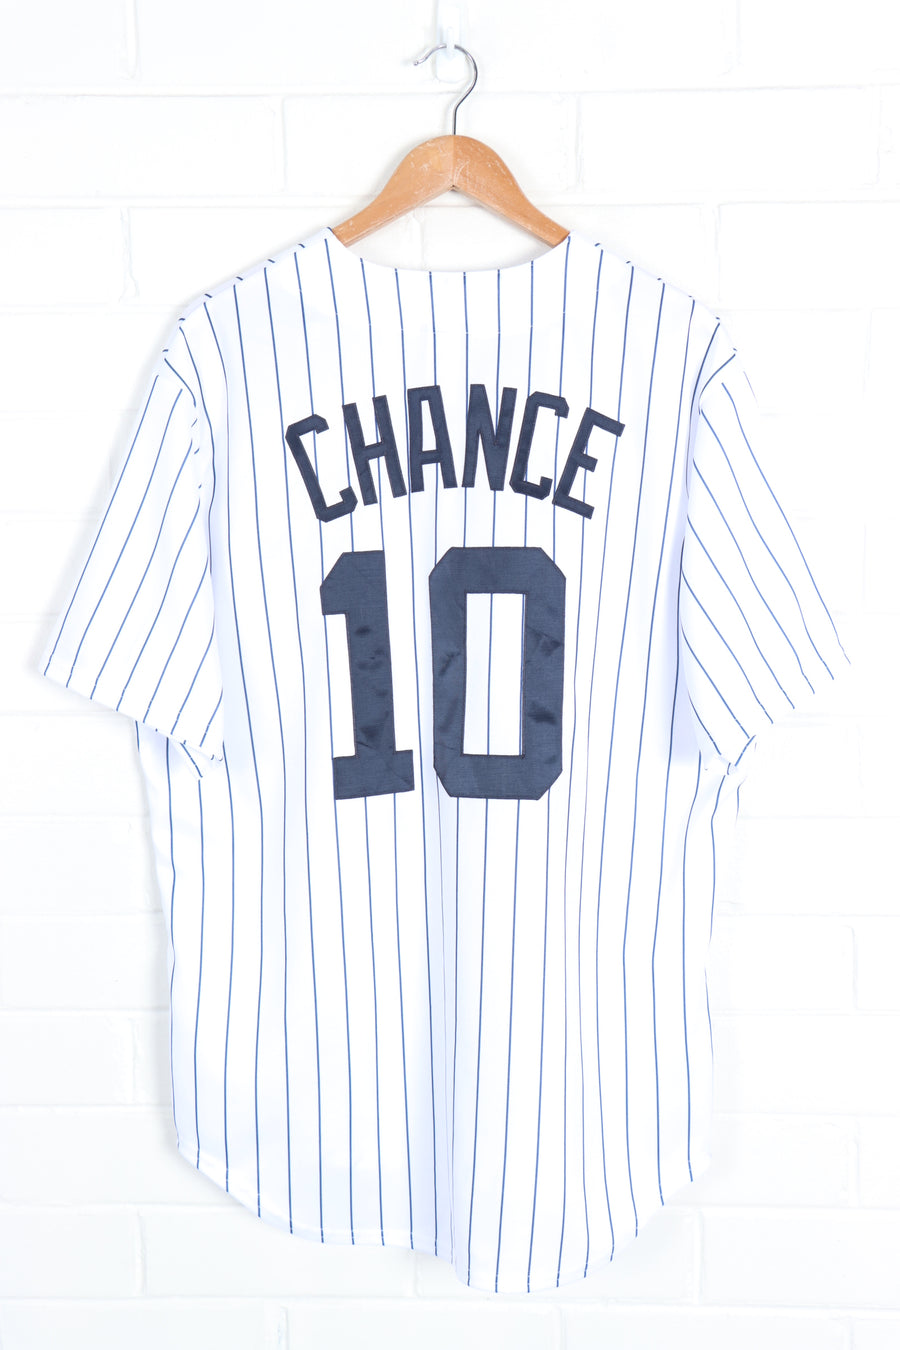 MAJESTIC NY Yankees MLB Chance #10 Baseball Jersey (XL) - Vintage Sole Melbourne